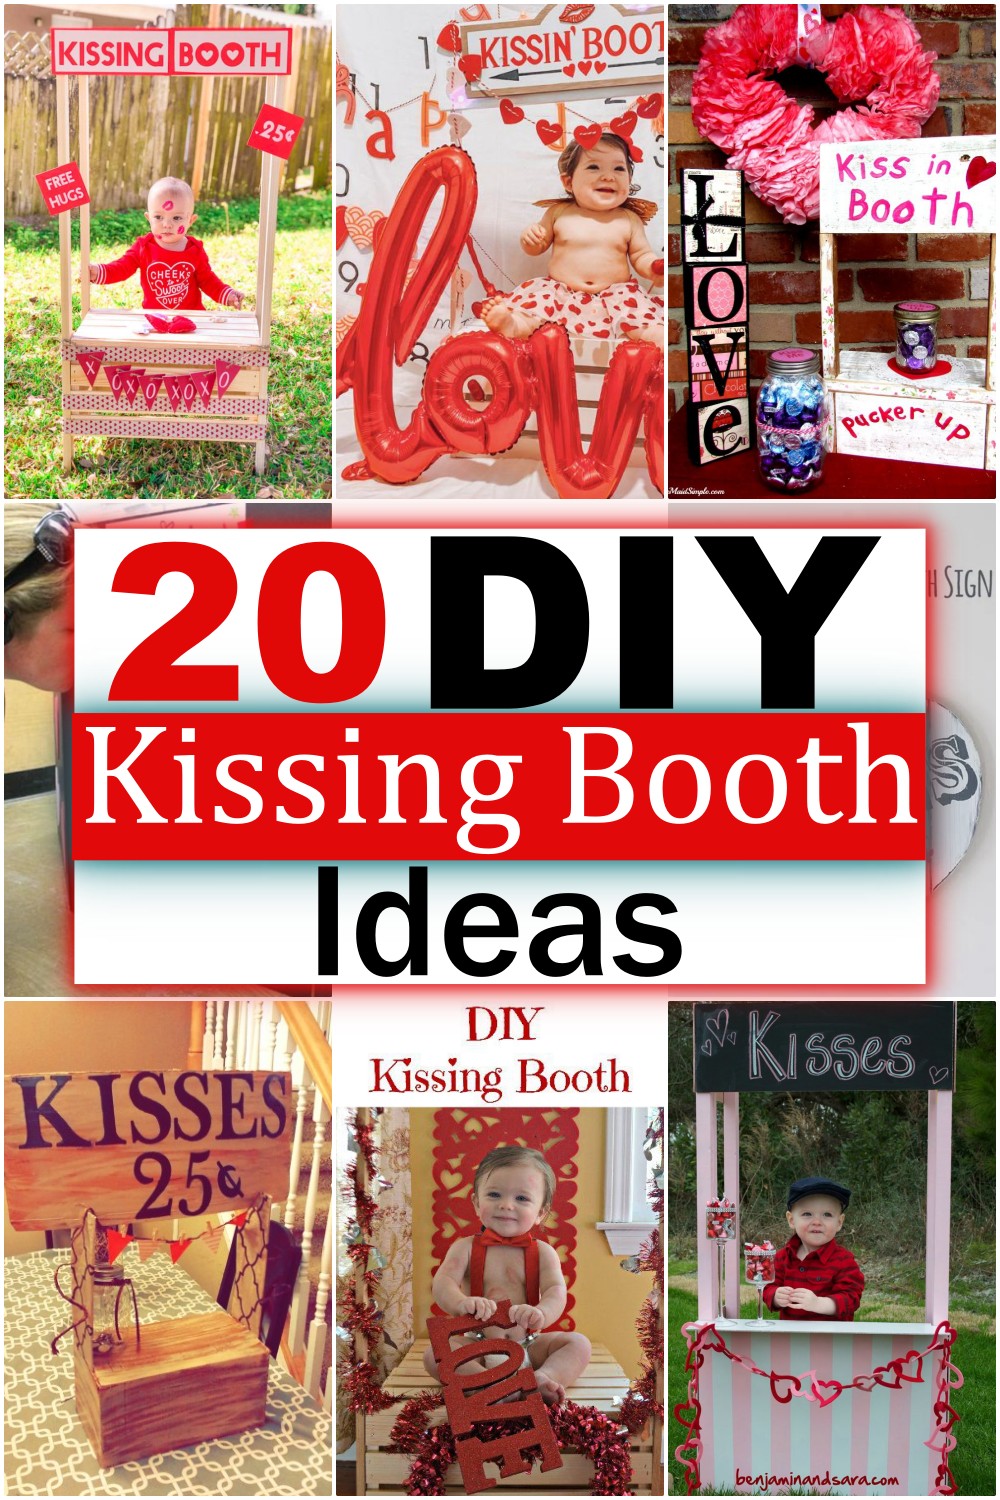 DIY Kissing Booth Ideas